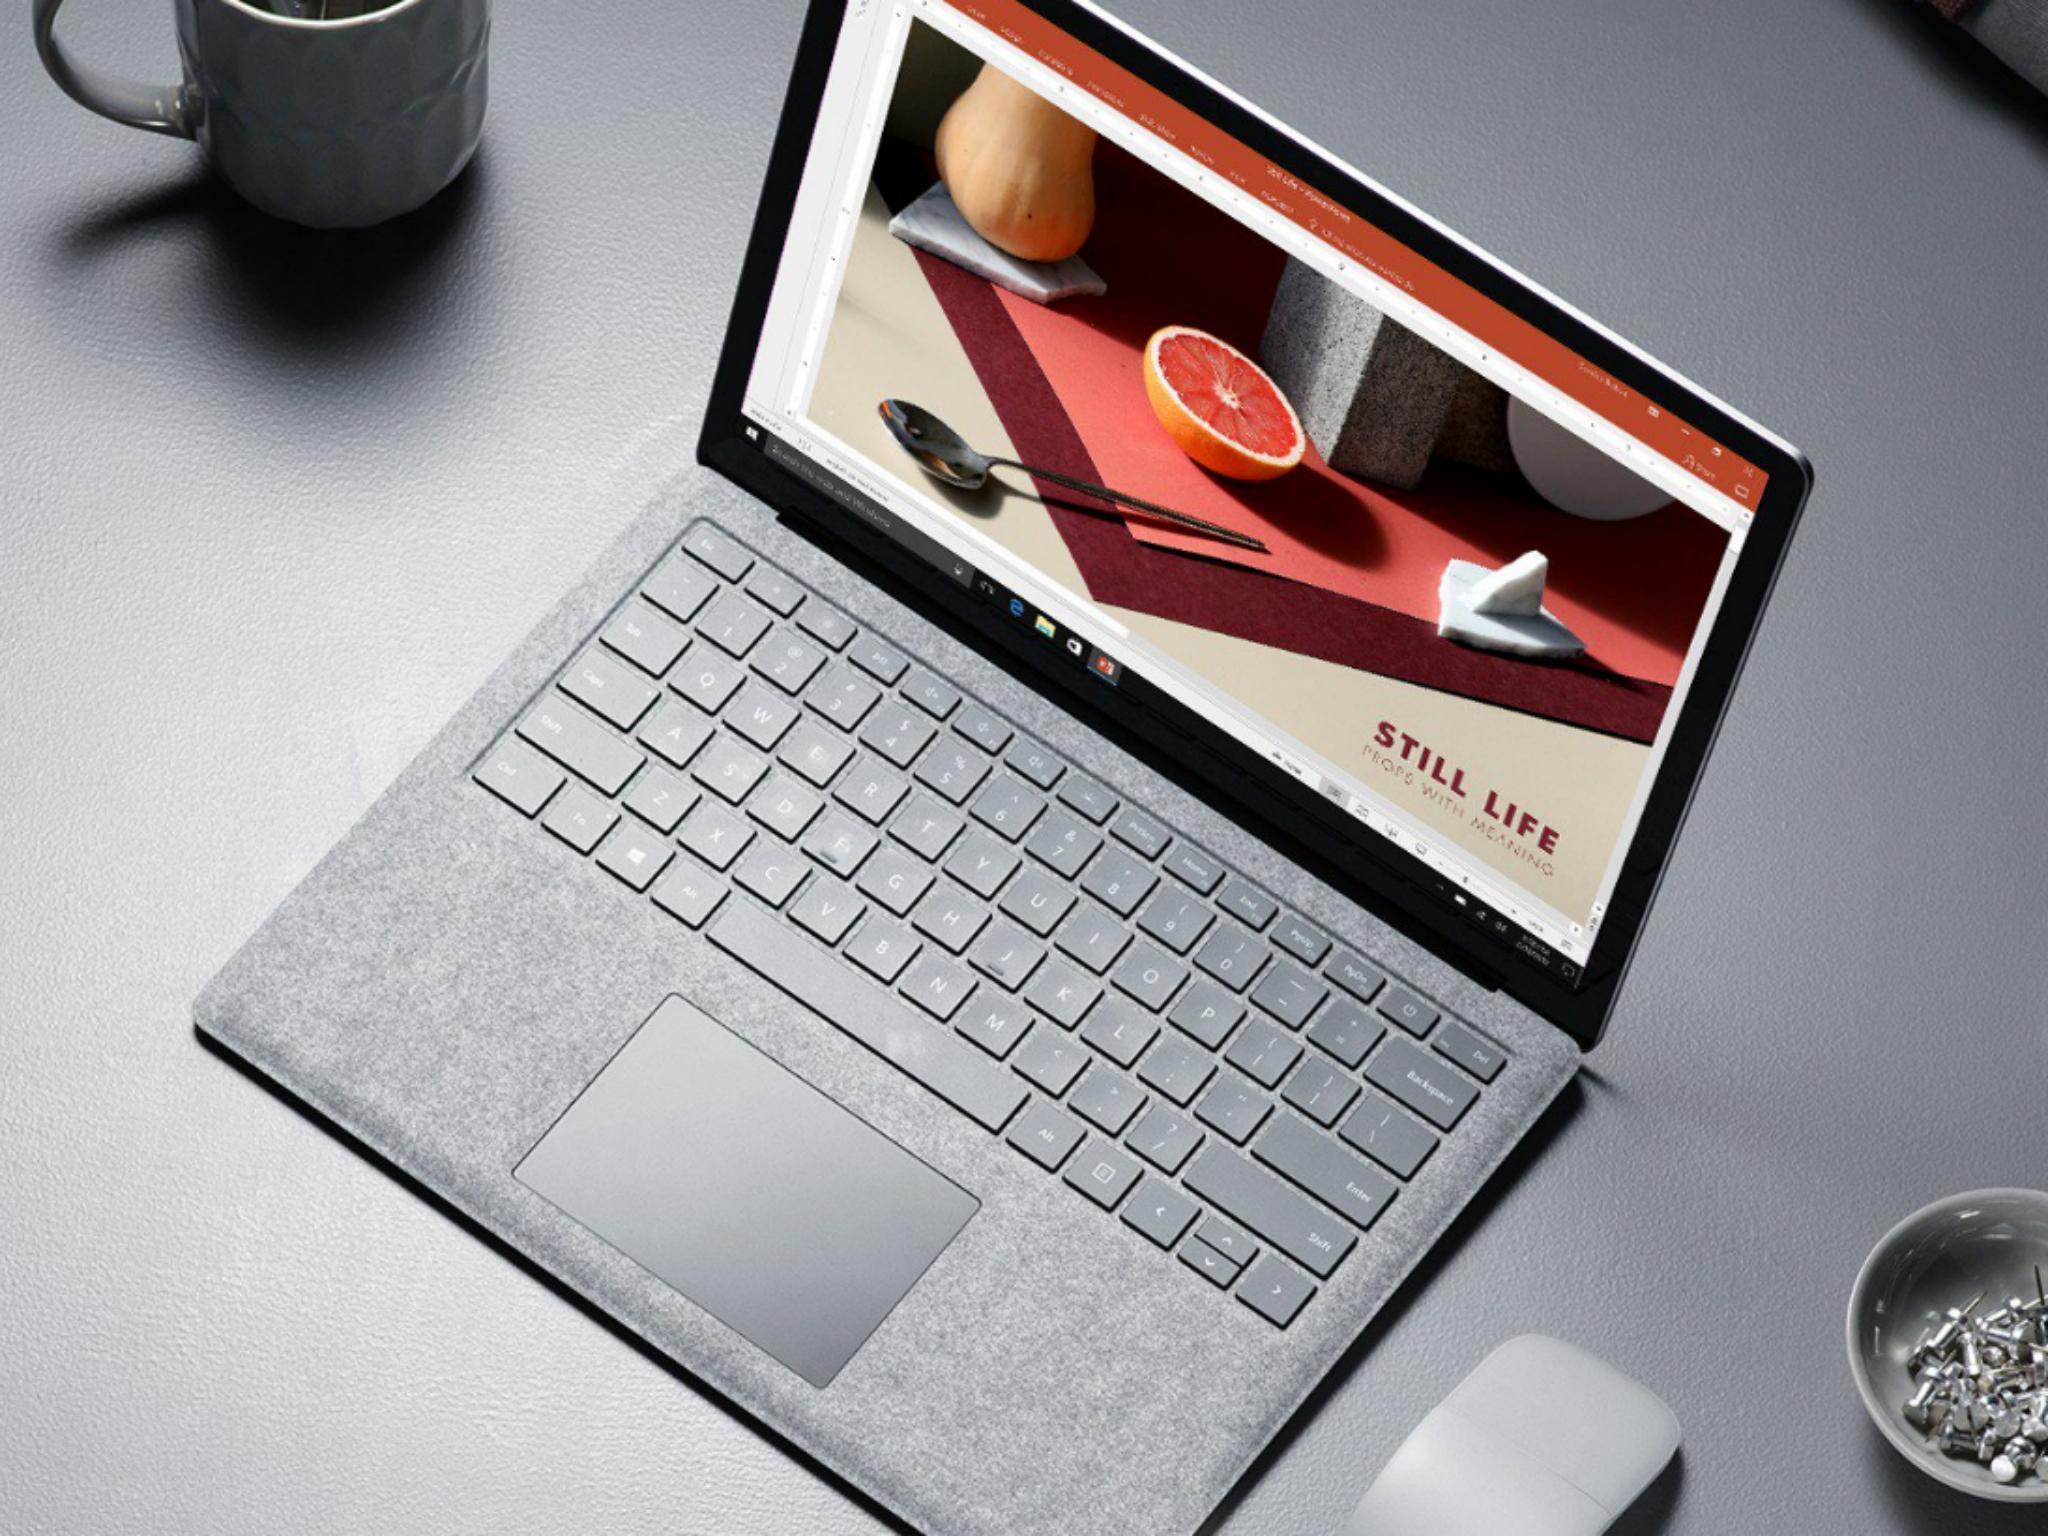 The Laptop runs Microsoft's new Windows 10 S operating system